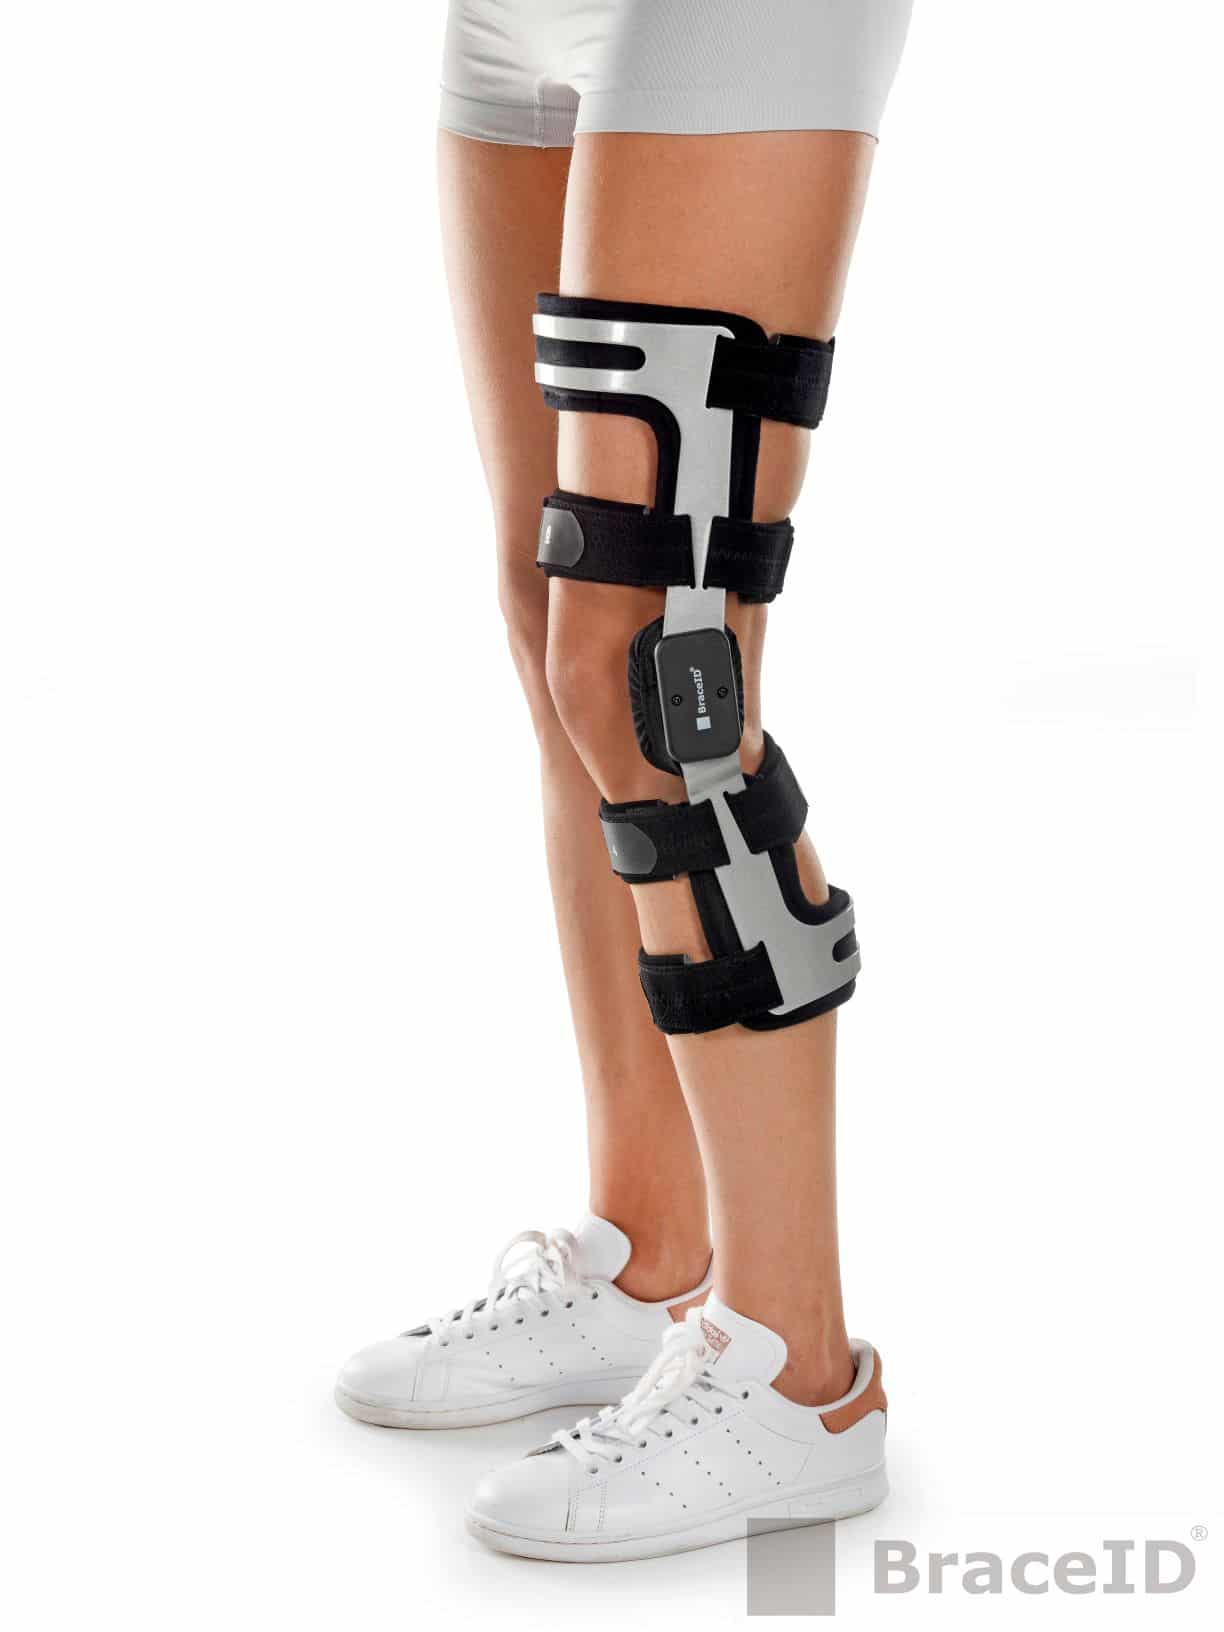 Rigid Functional Knee Brace, Knee Instability, Orthotix